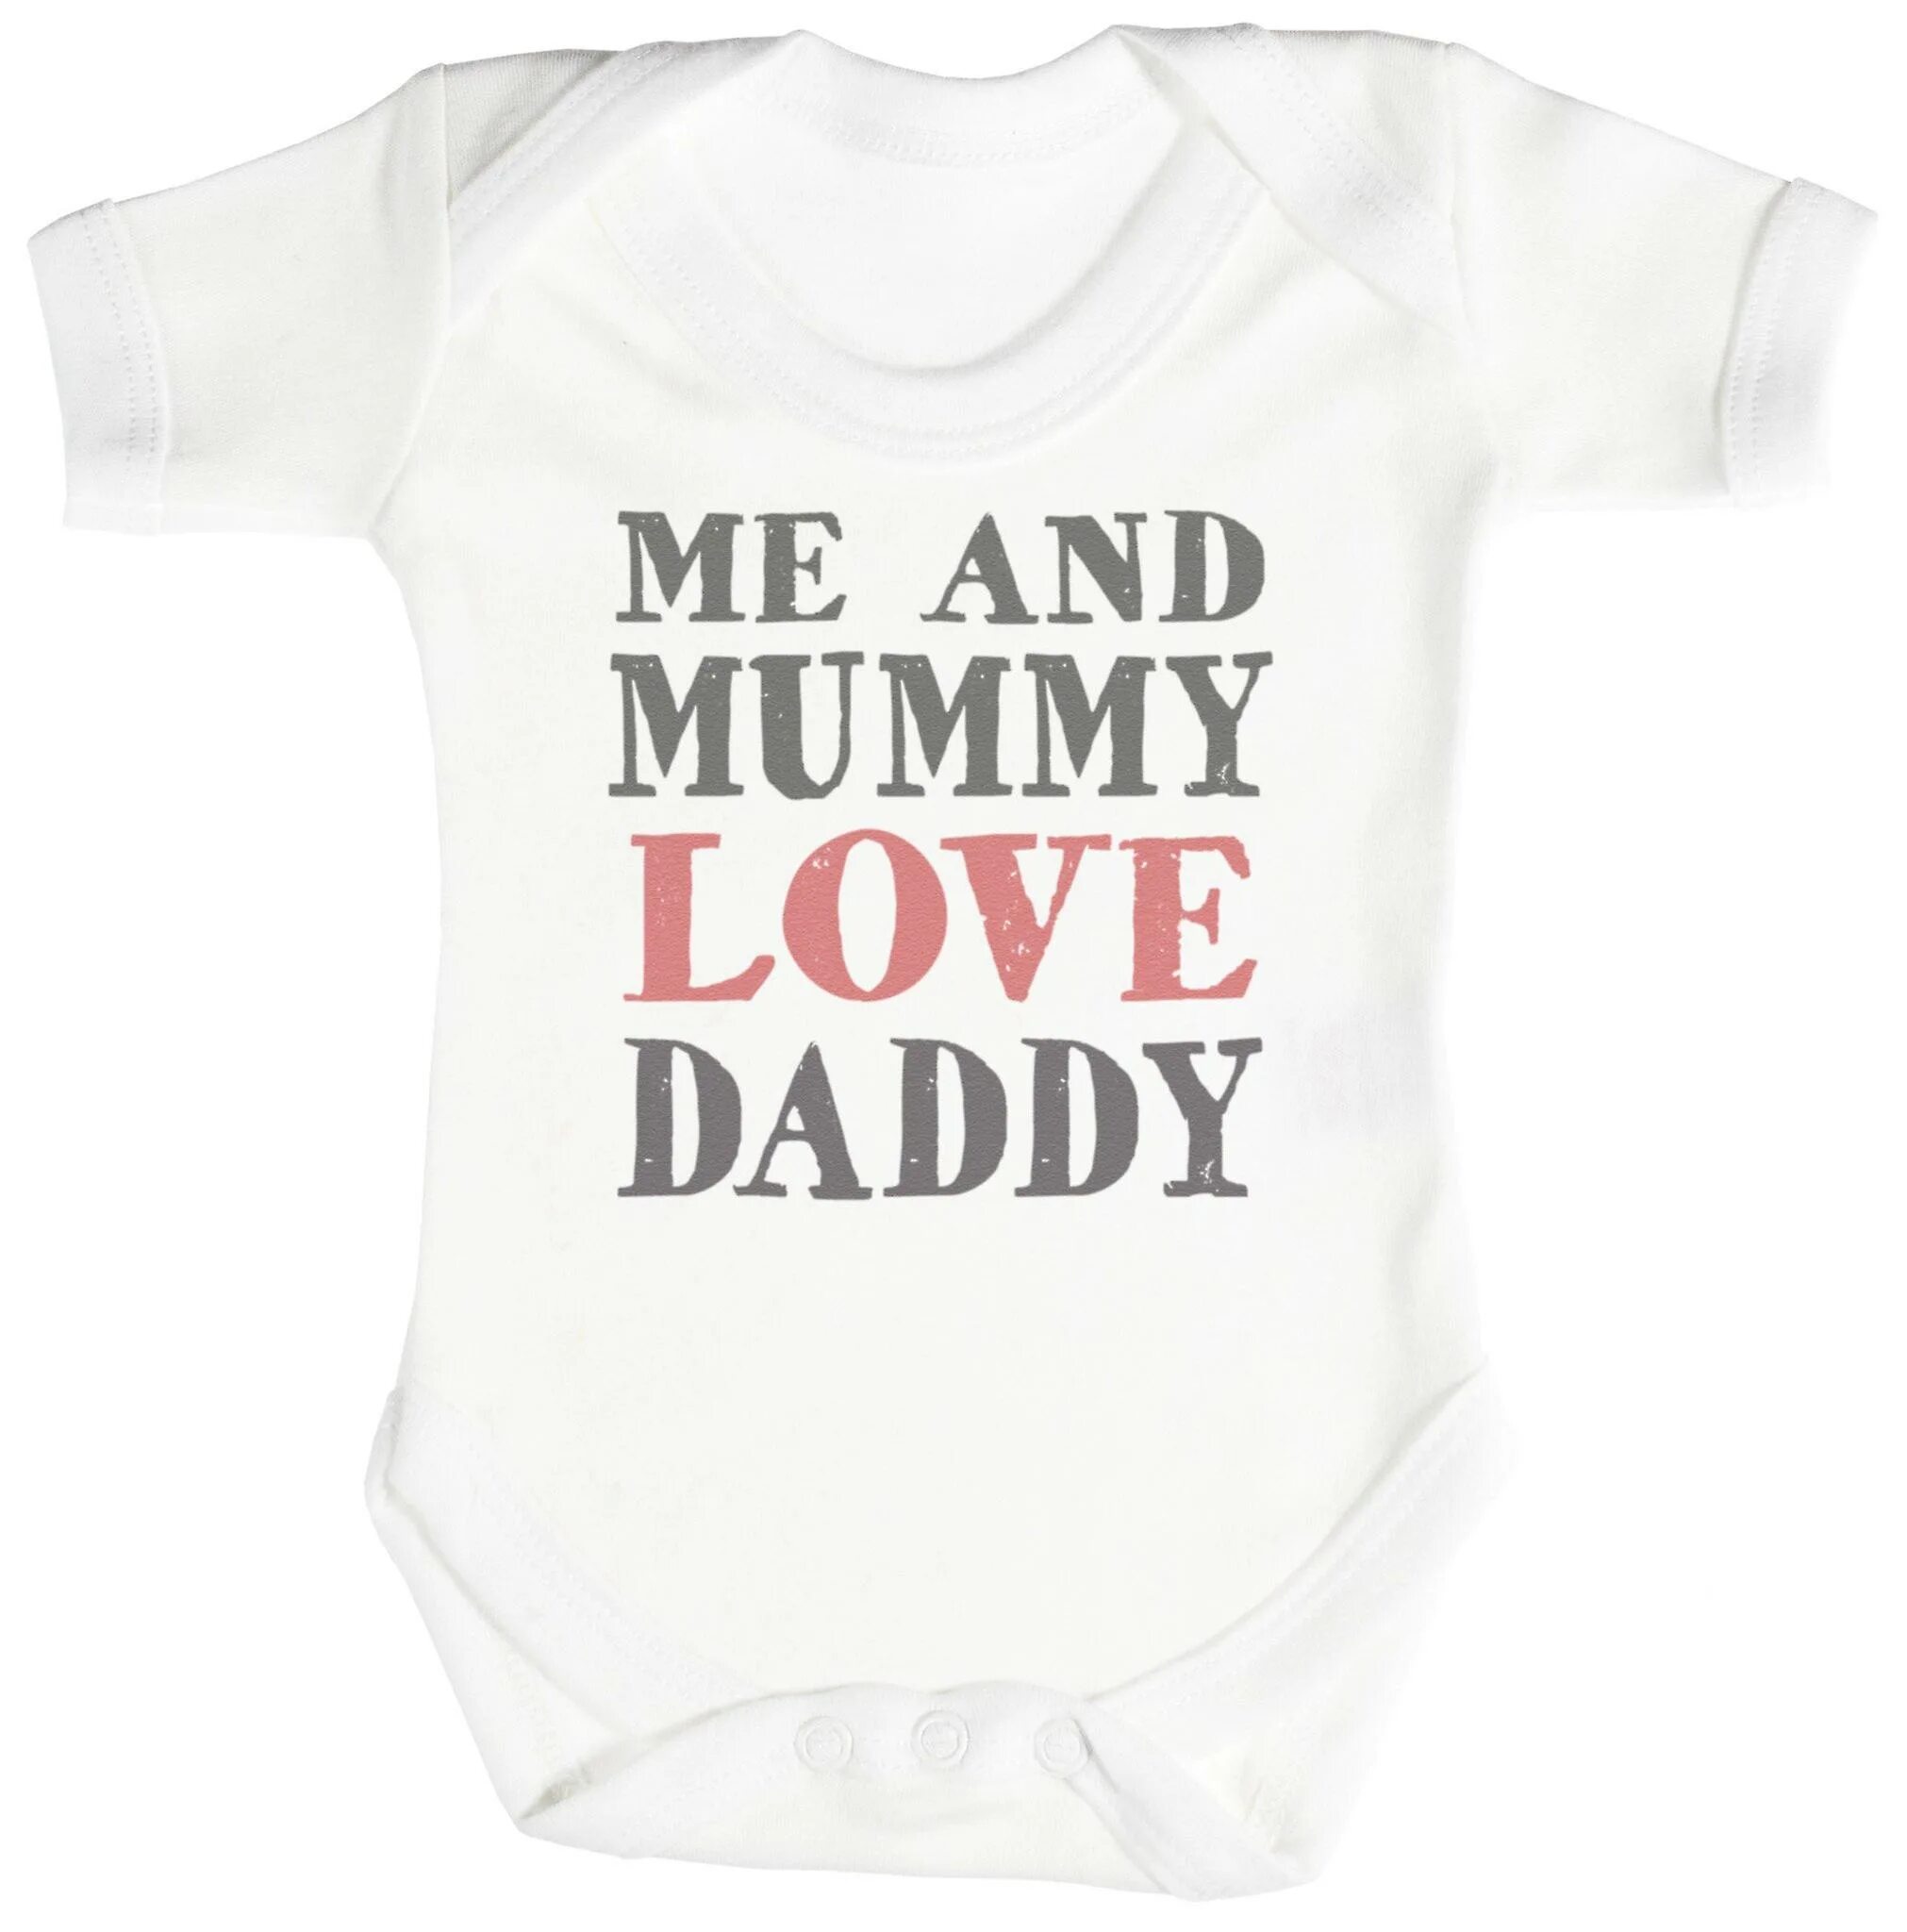 T t i love you daddy. Боди i Love Daddy. Love Mummy. Боди для новорожденных i Love dad. I Love Mummy and Daddy.